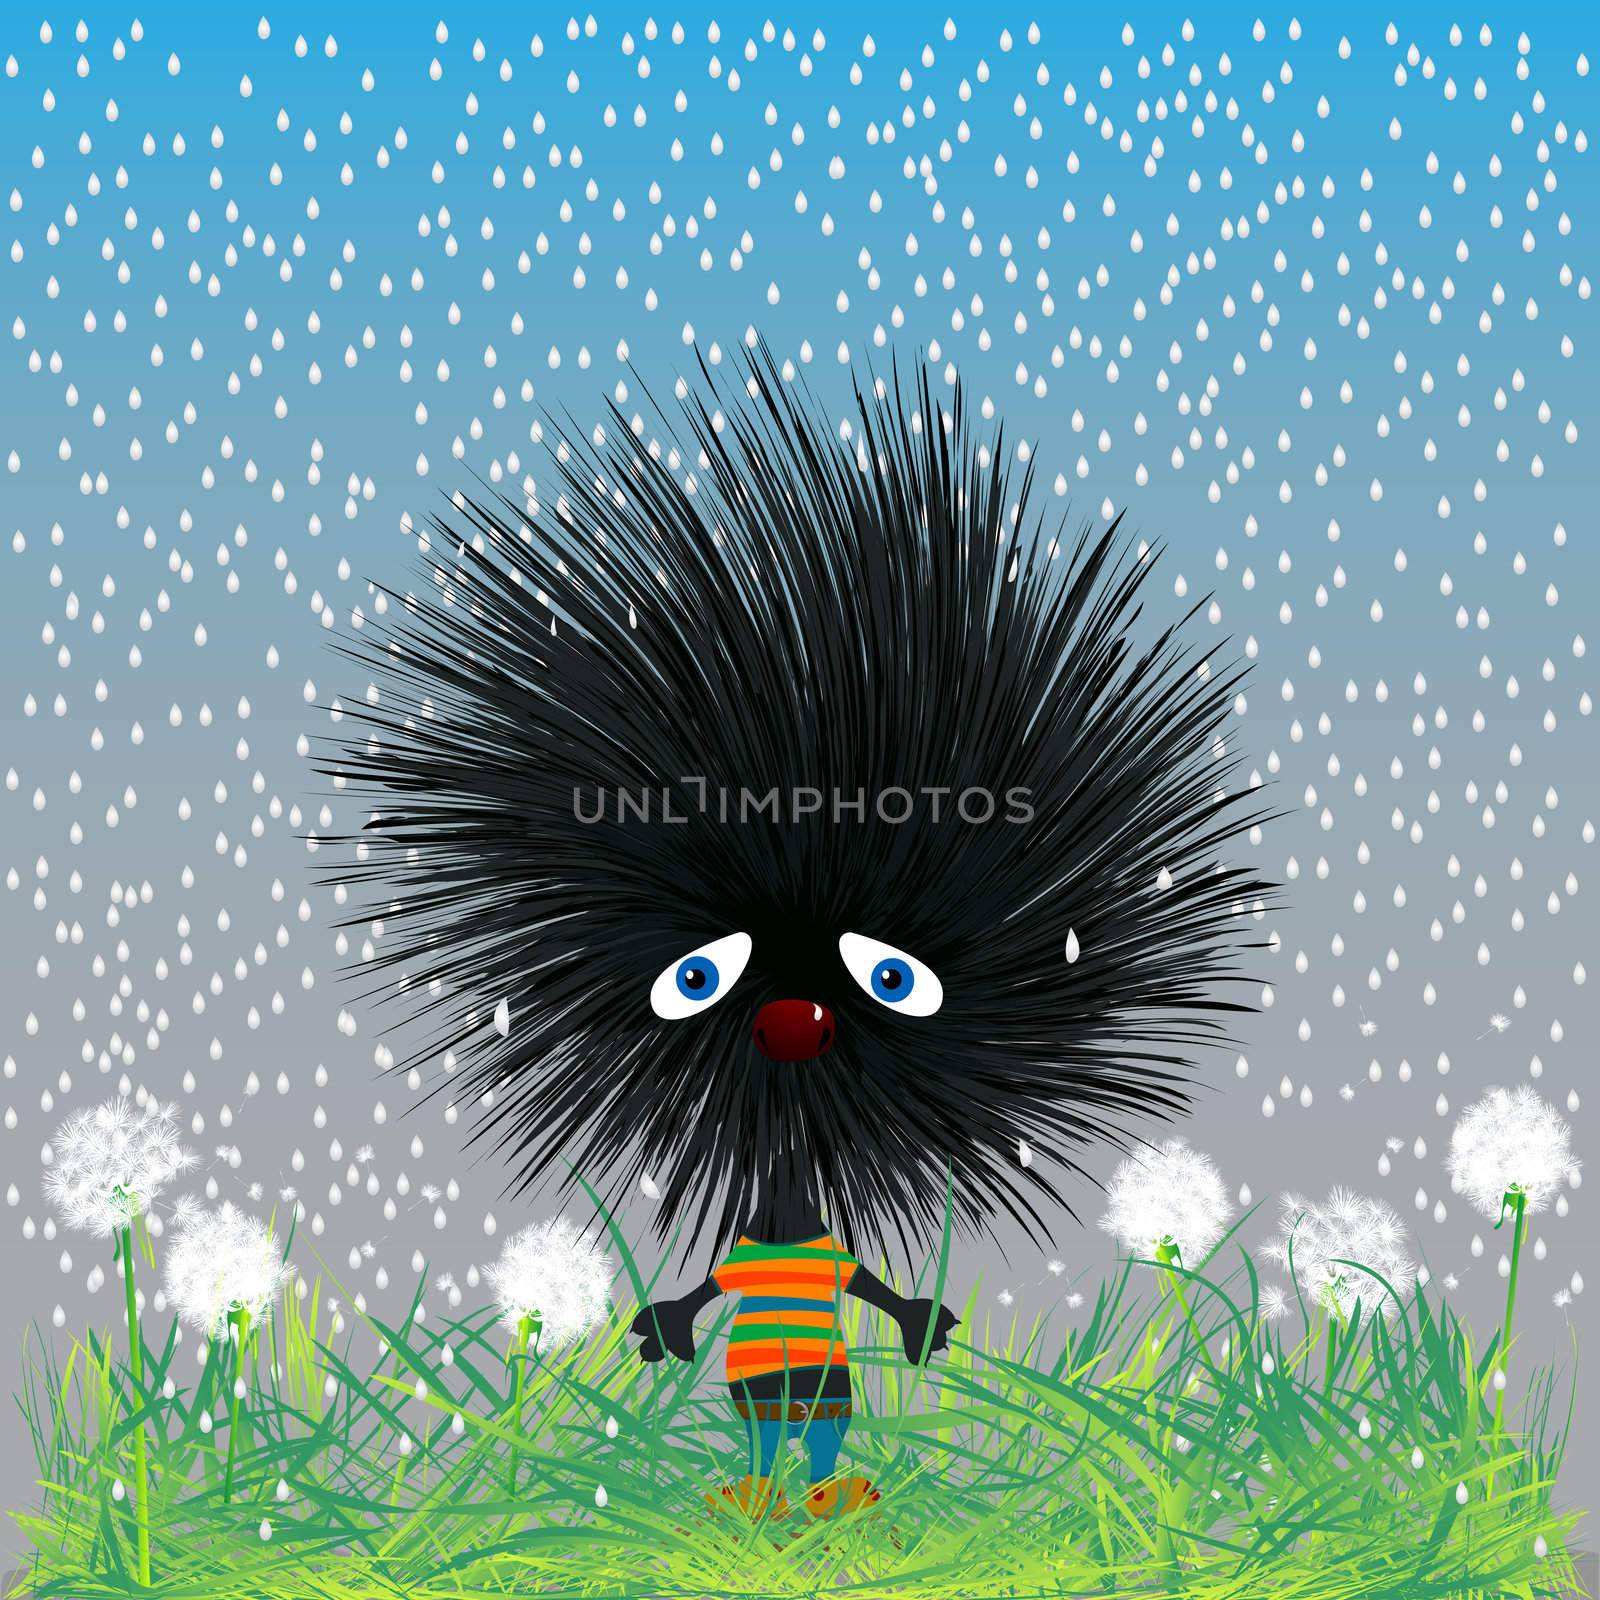 Background sketch with a sad hadehog on a dandelion field in the rain